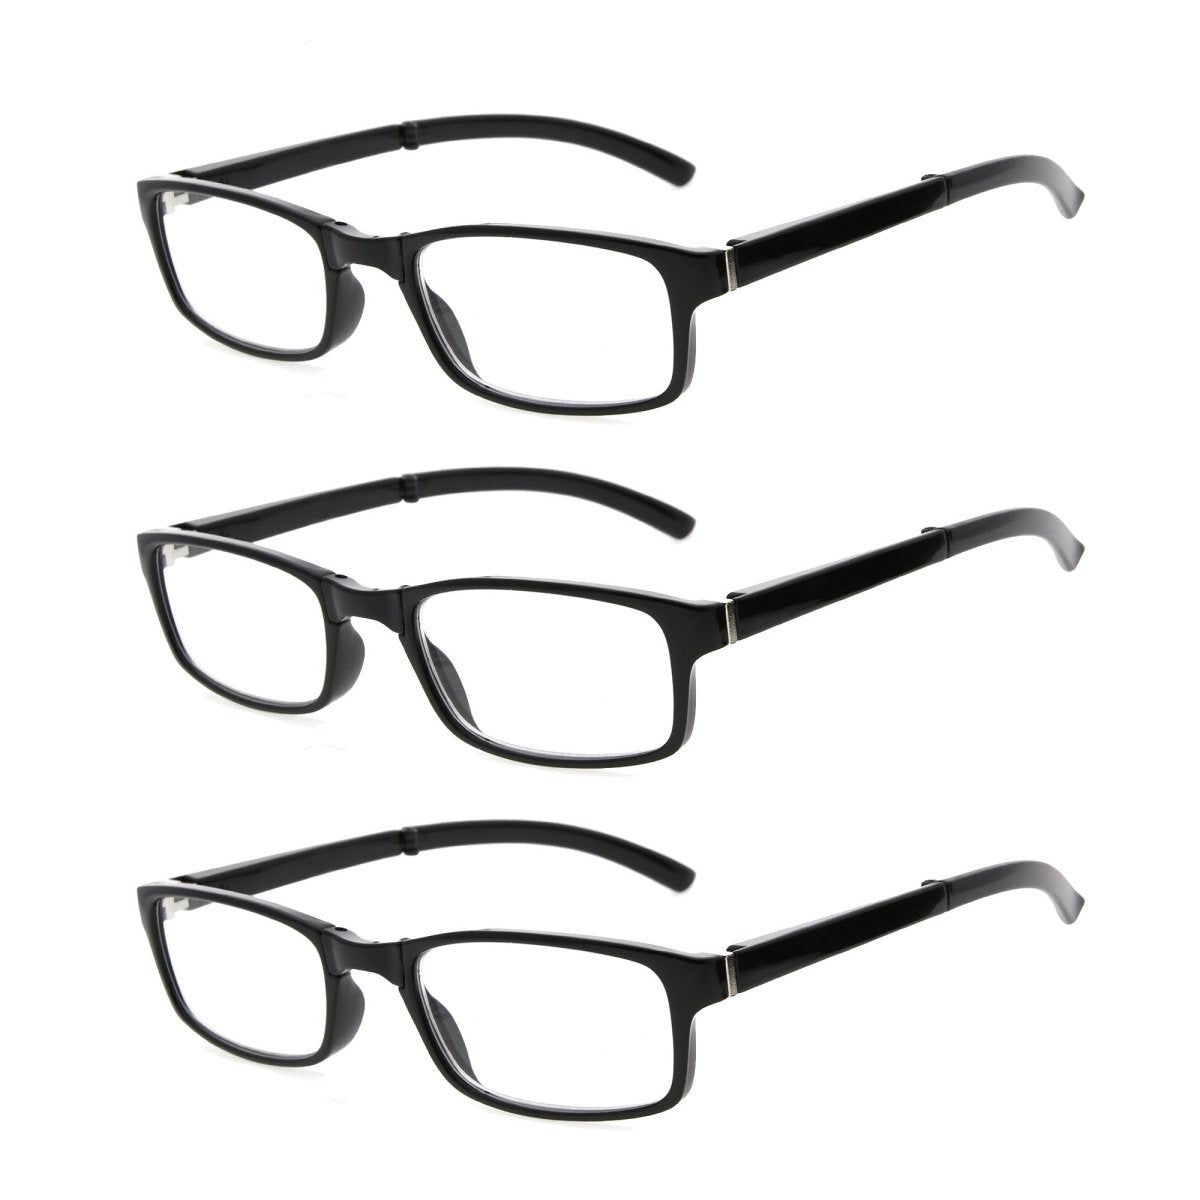 3 Pack Chic Reading Glasses Foldable Readers Women Men R123eyekeeper.com